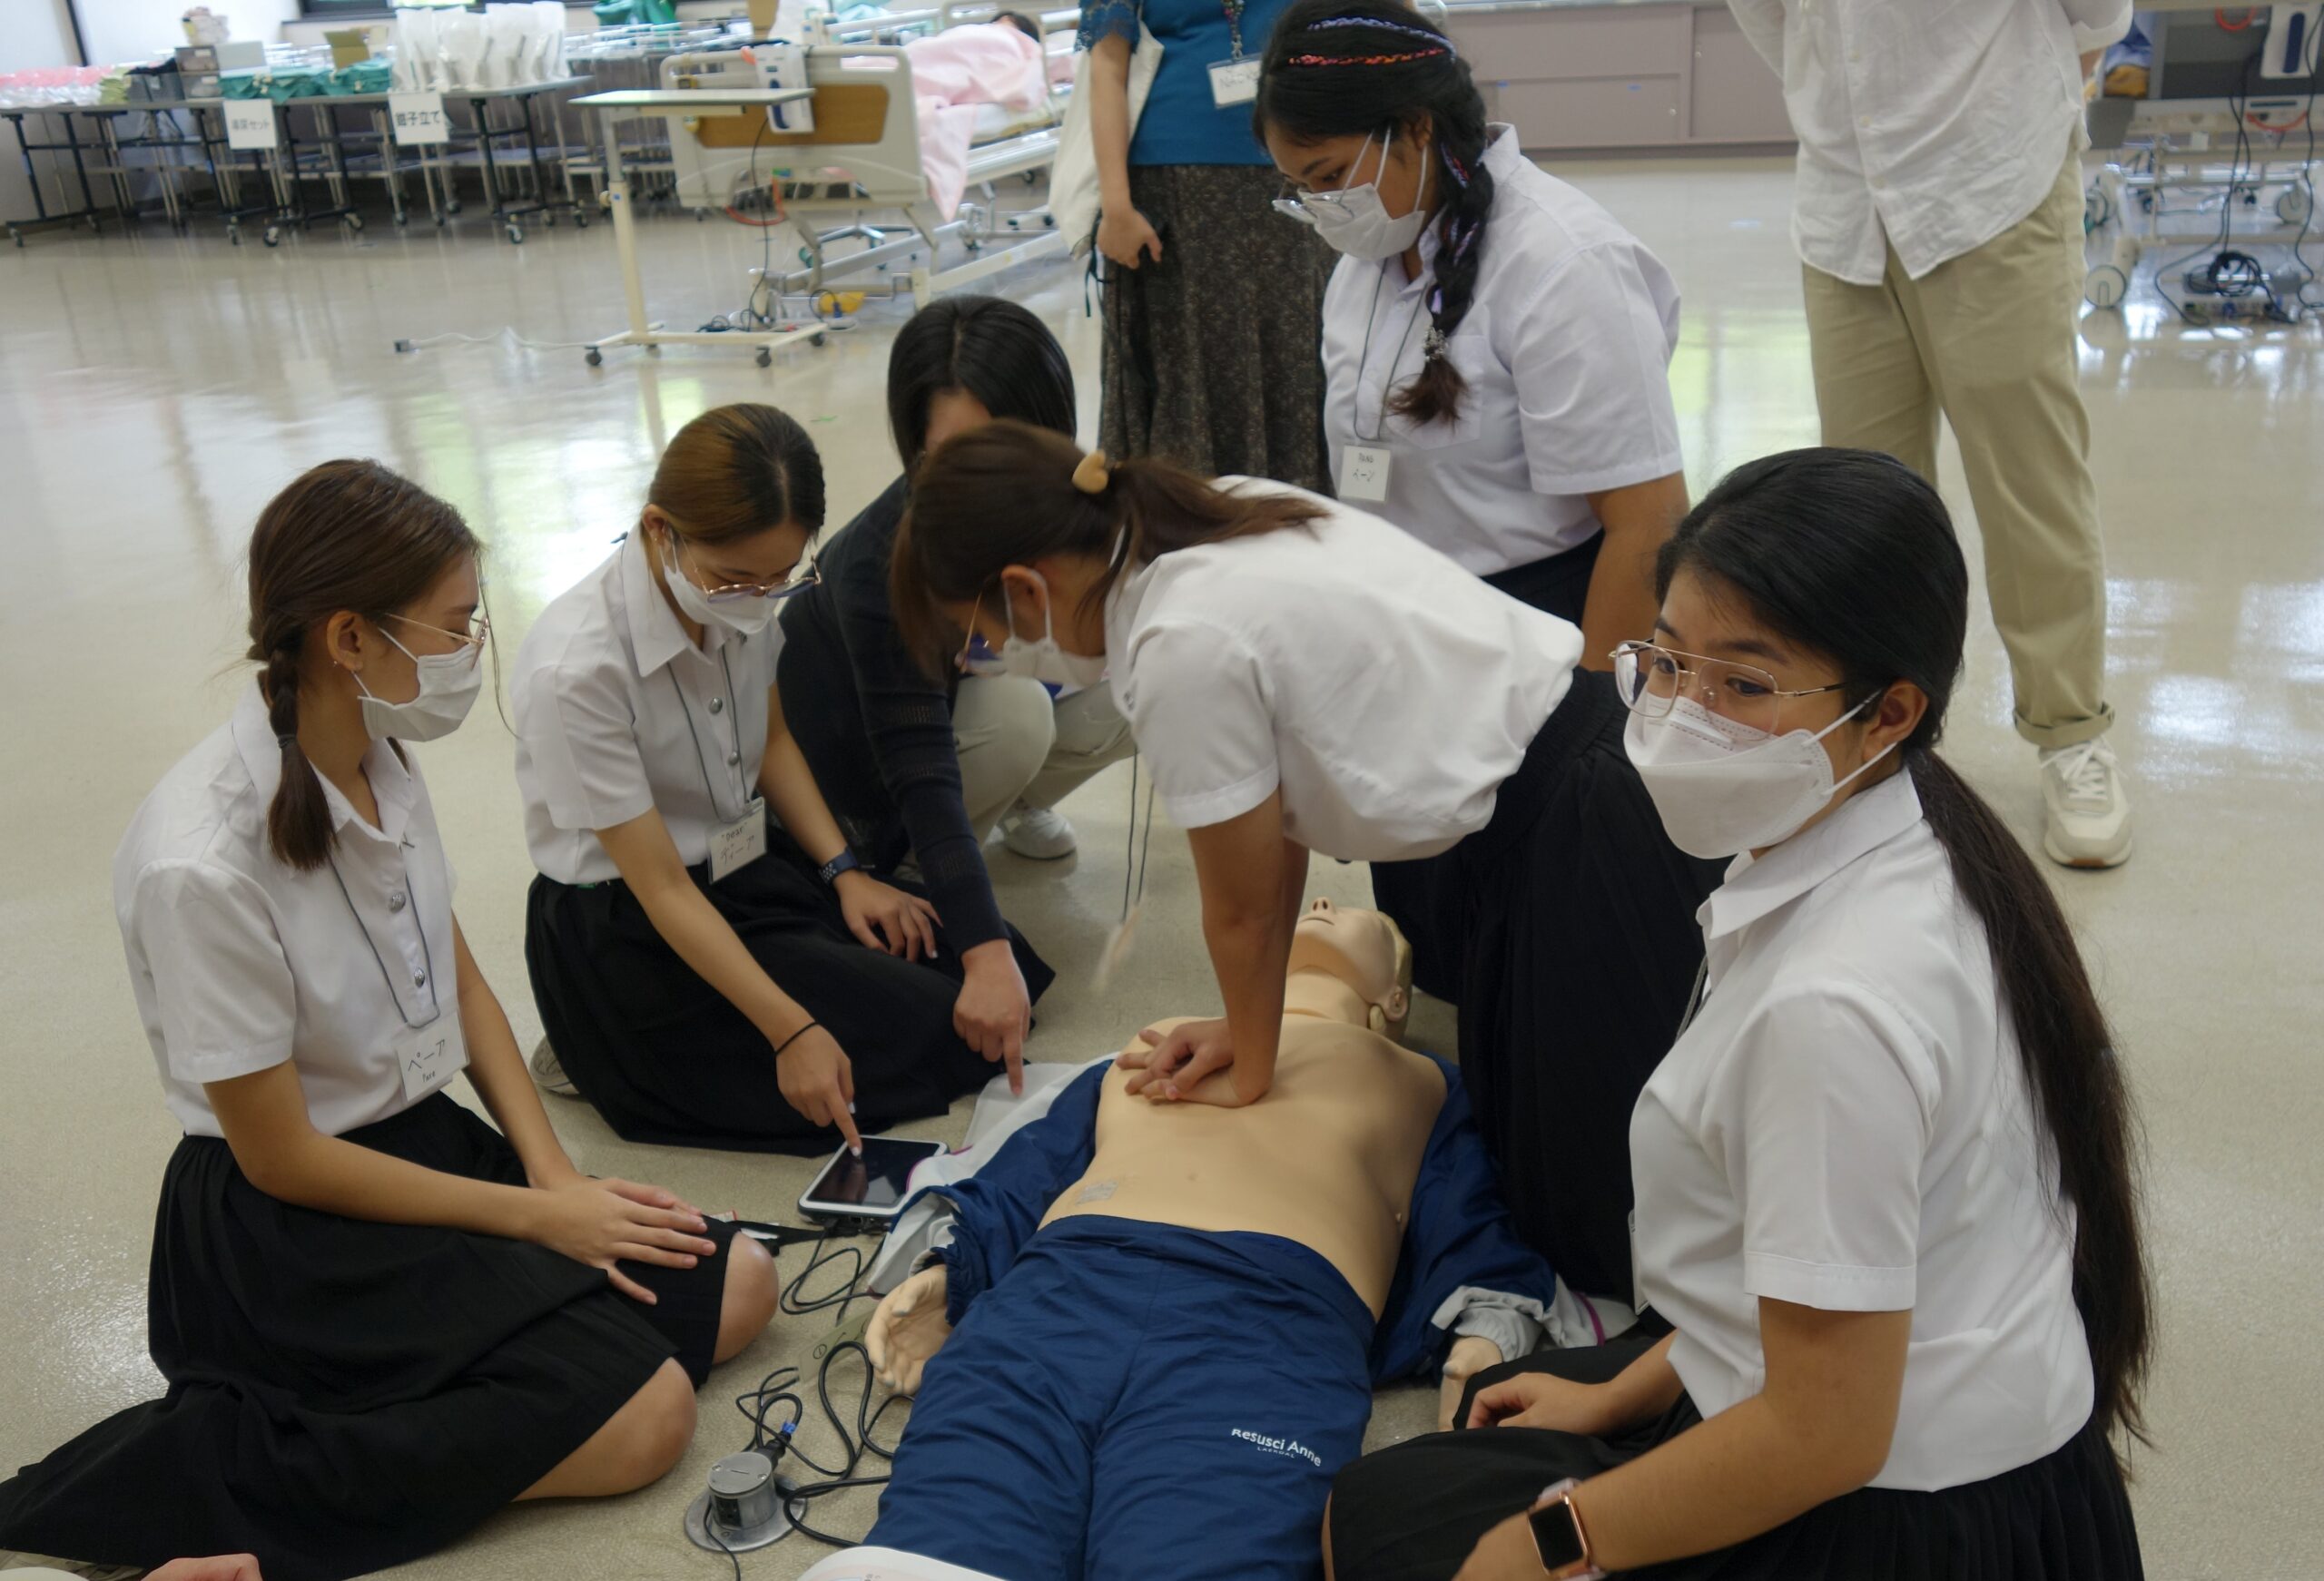 Practicing cardiopulmonary resuscitation